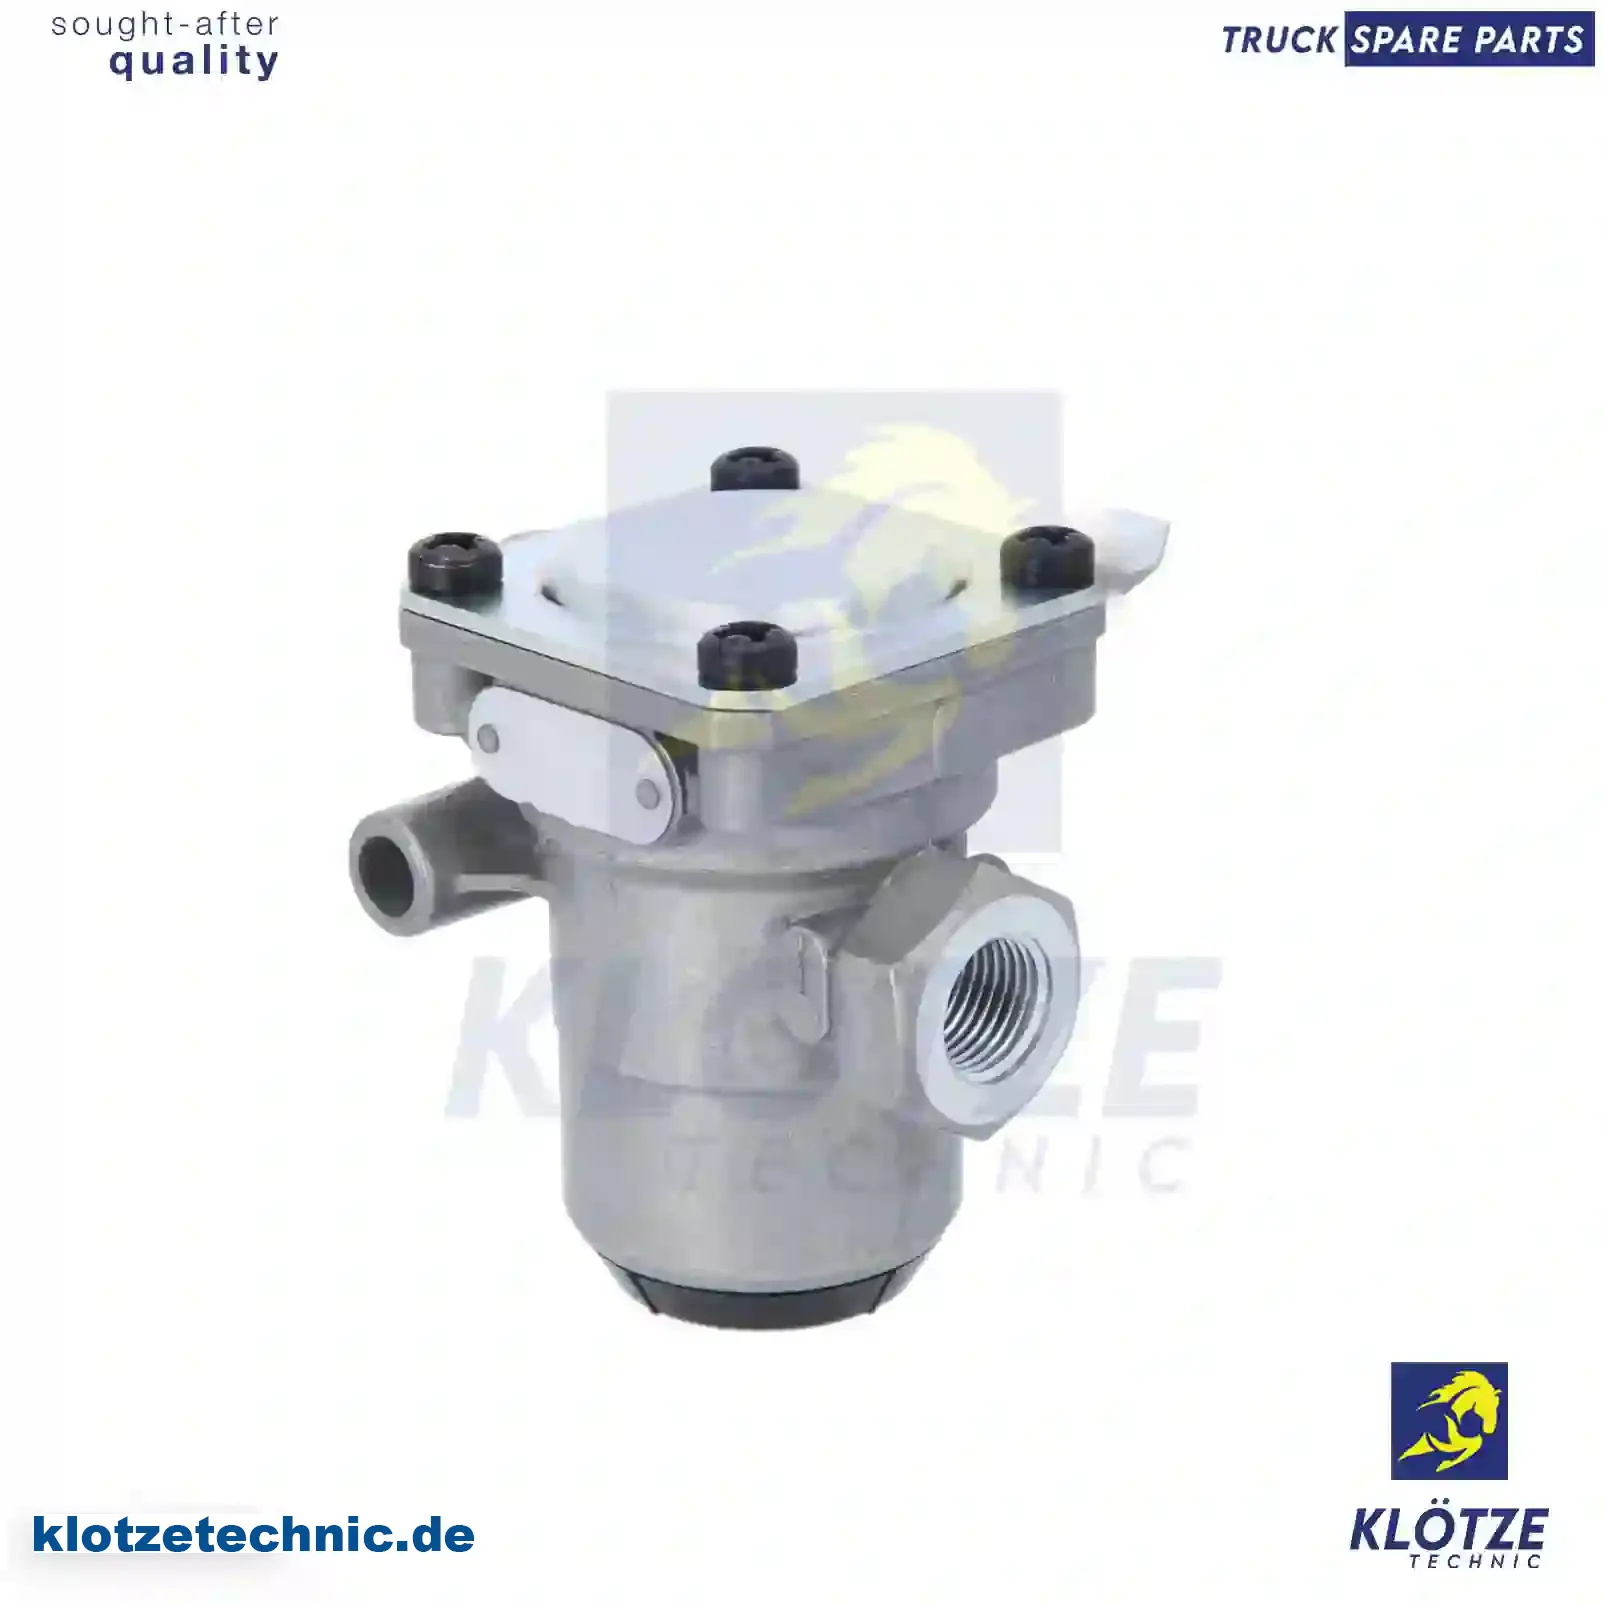 Pressure limiting valve, 2205623 || Klötze Technic